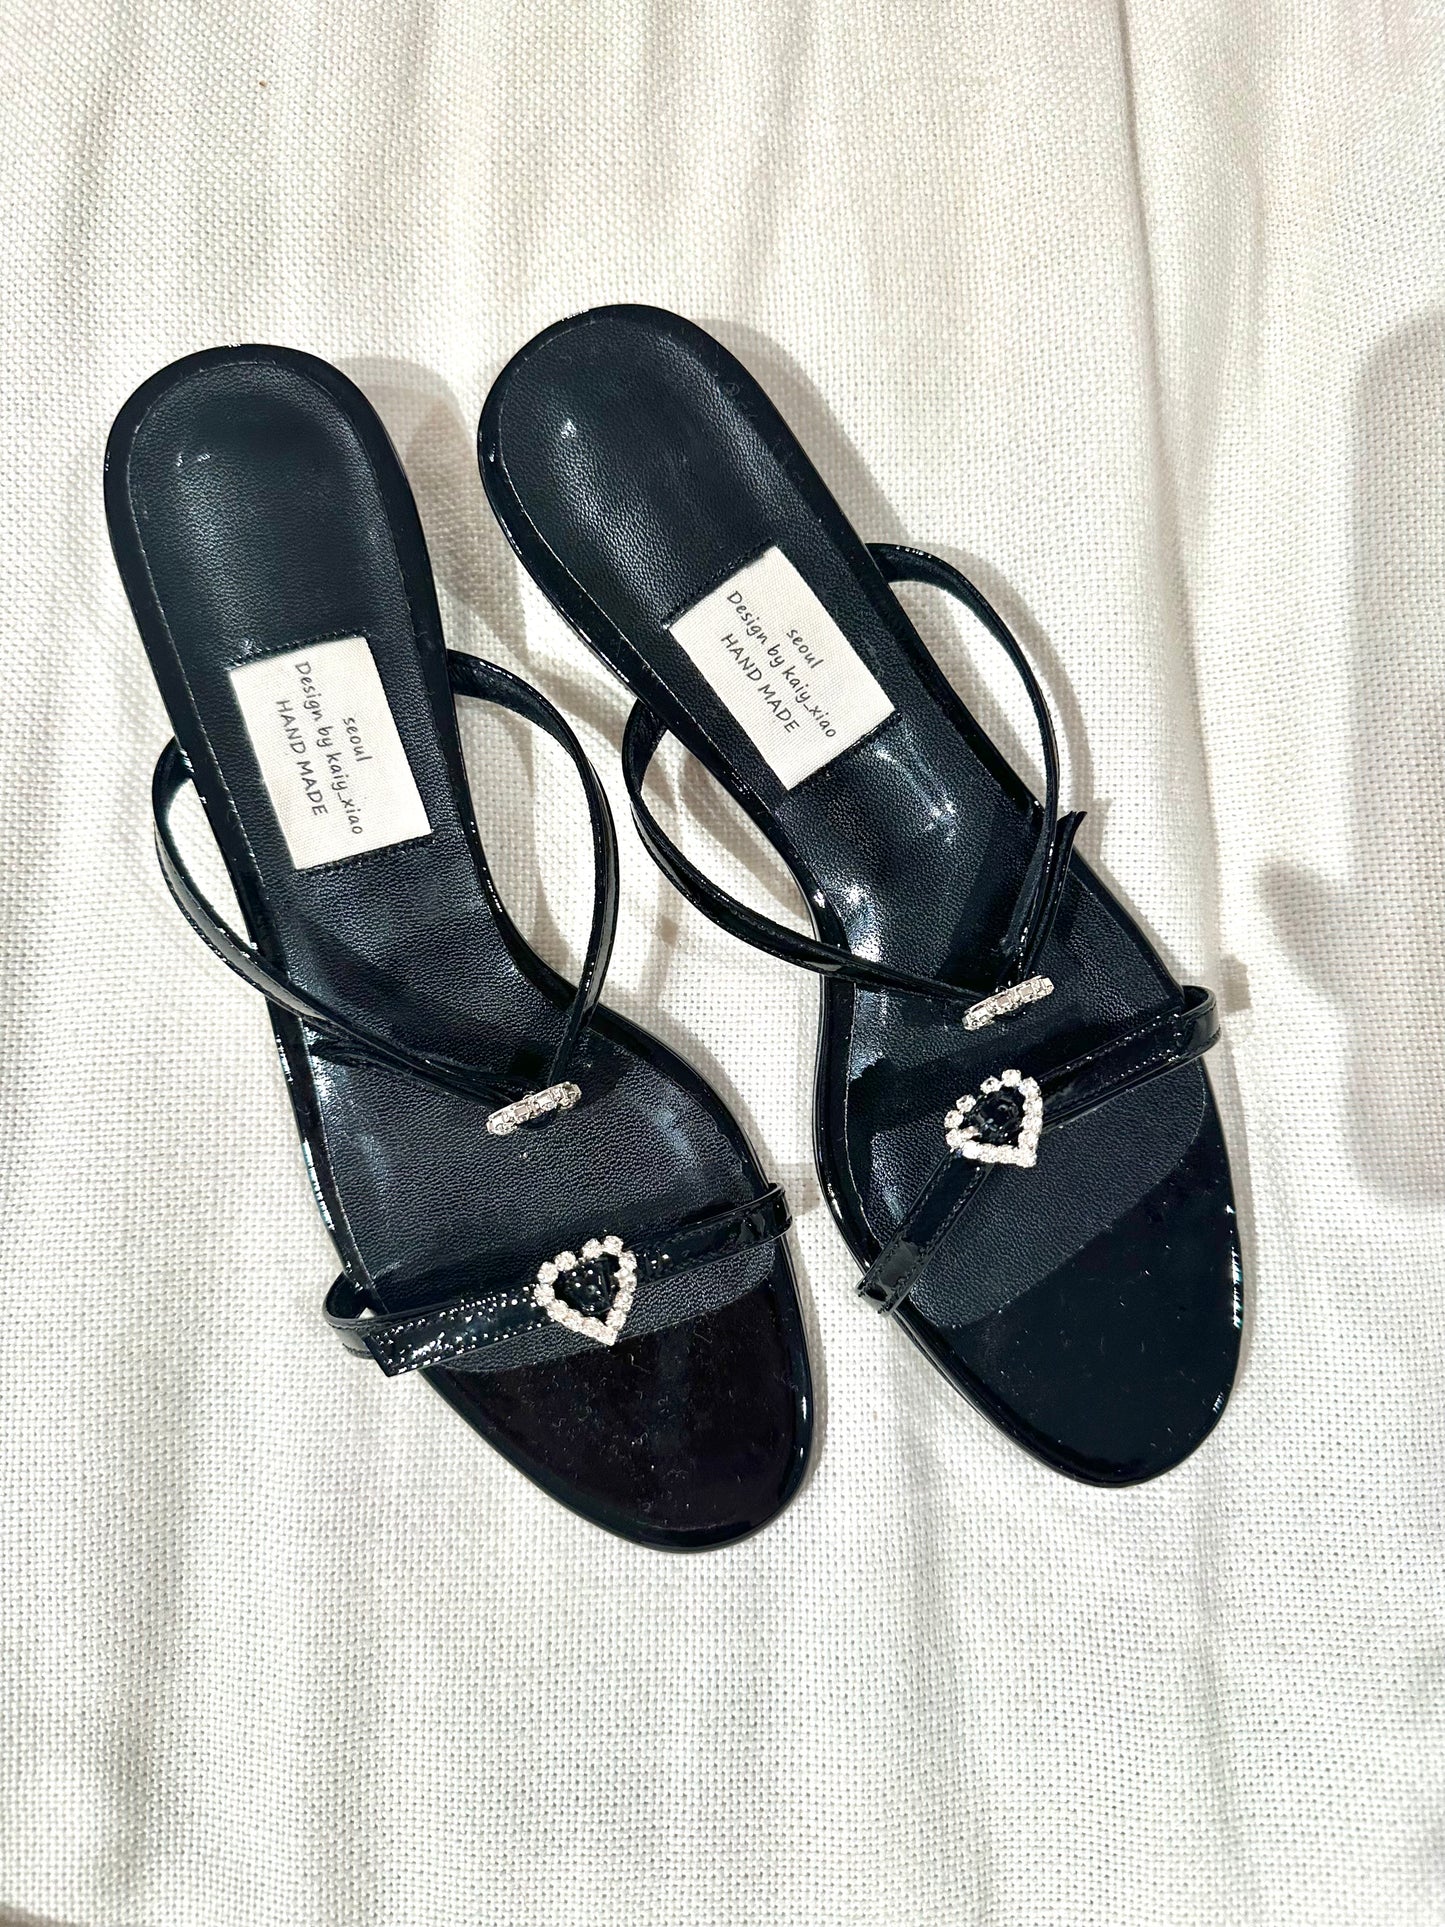 Kaiy Xiao Heart Sandals Black 26